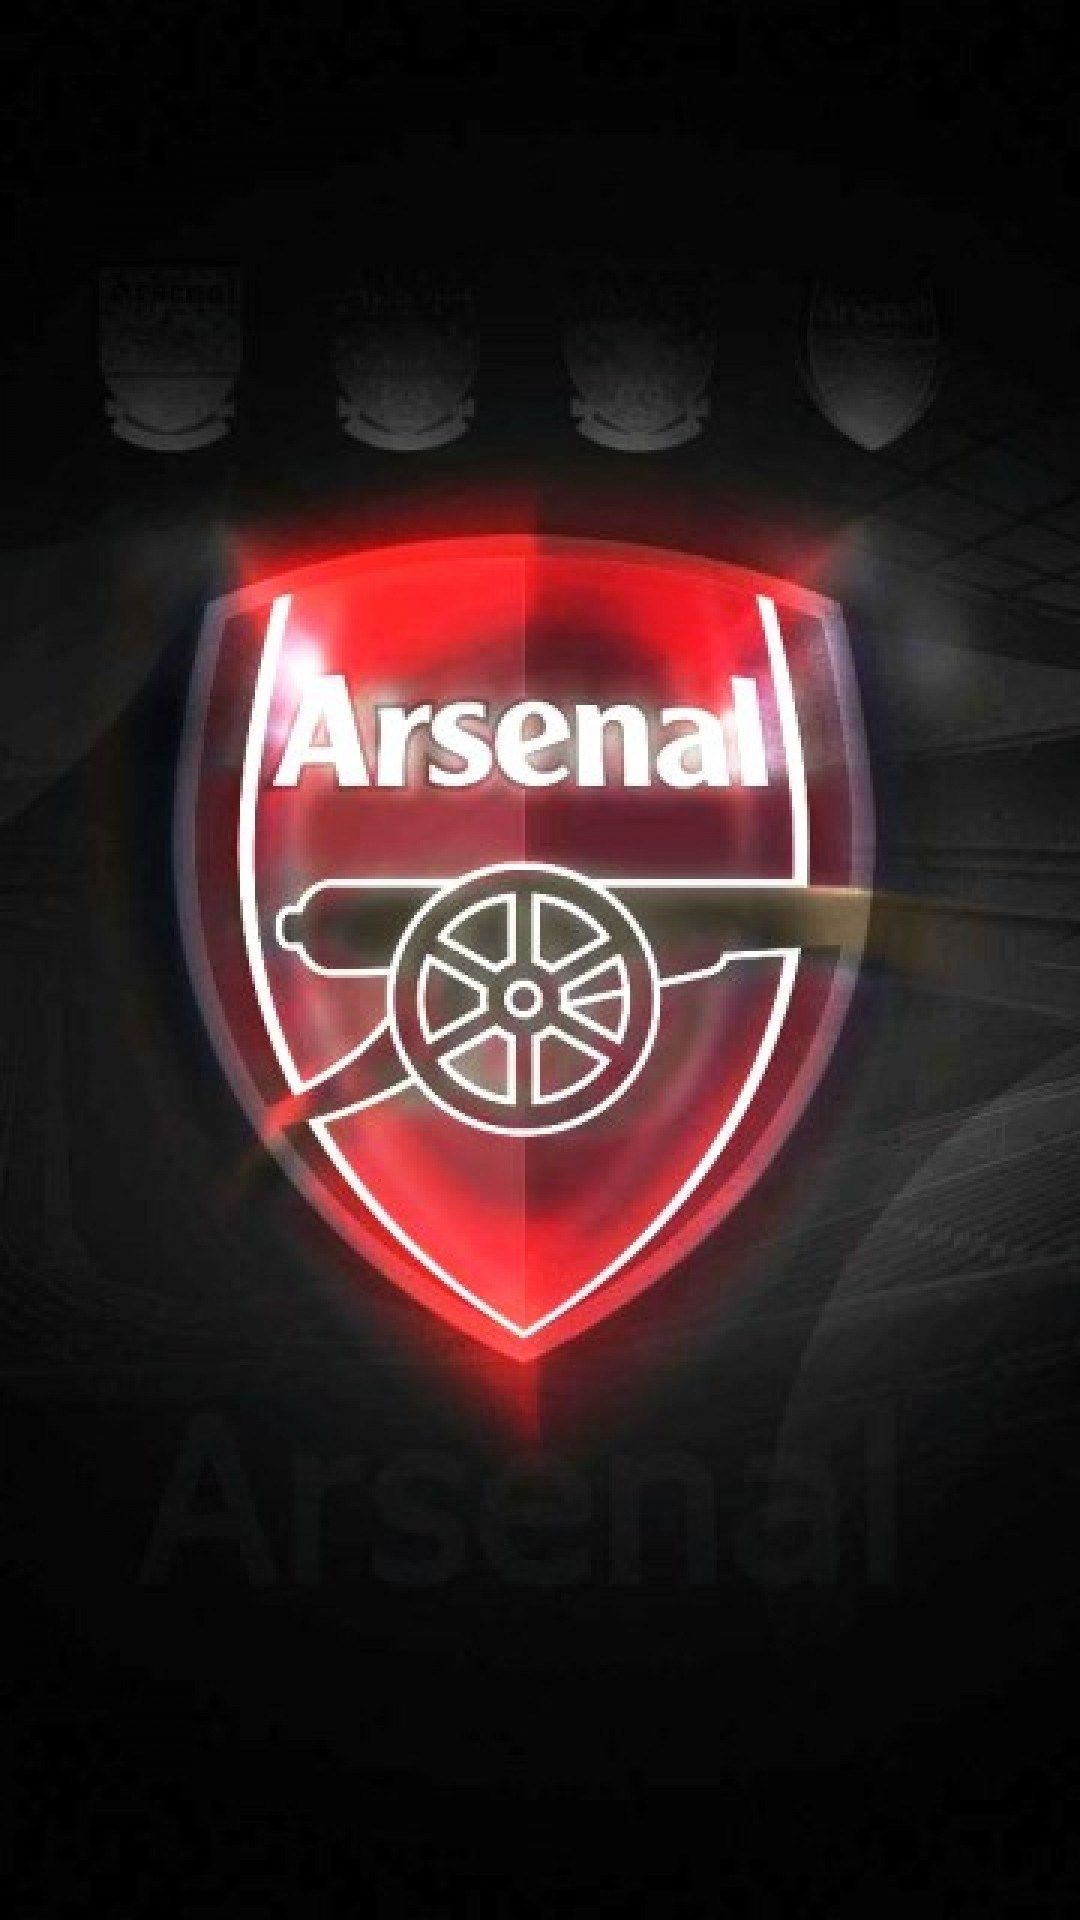 arsenal logo wallpaper full HD for mobile. ฟุตบอล, วอลเปเปอร์, กีฬา